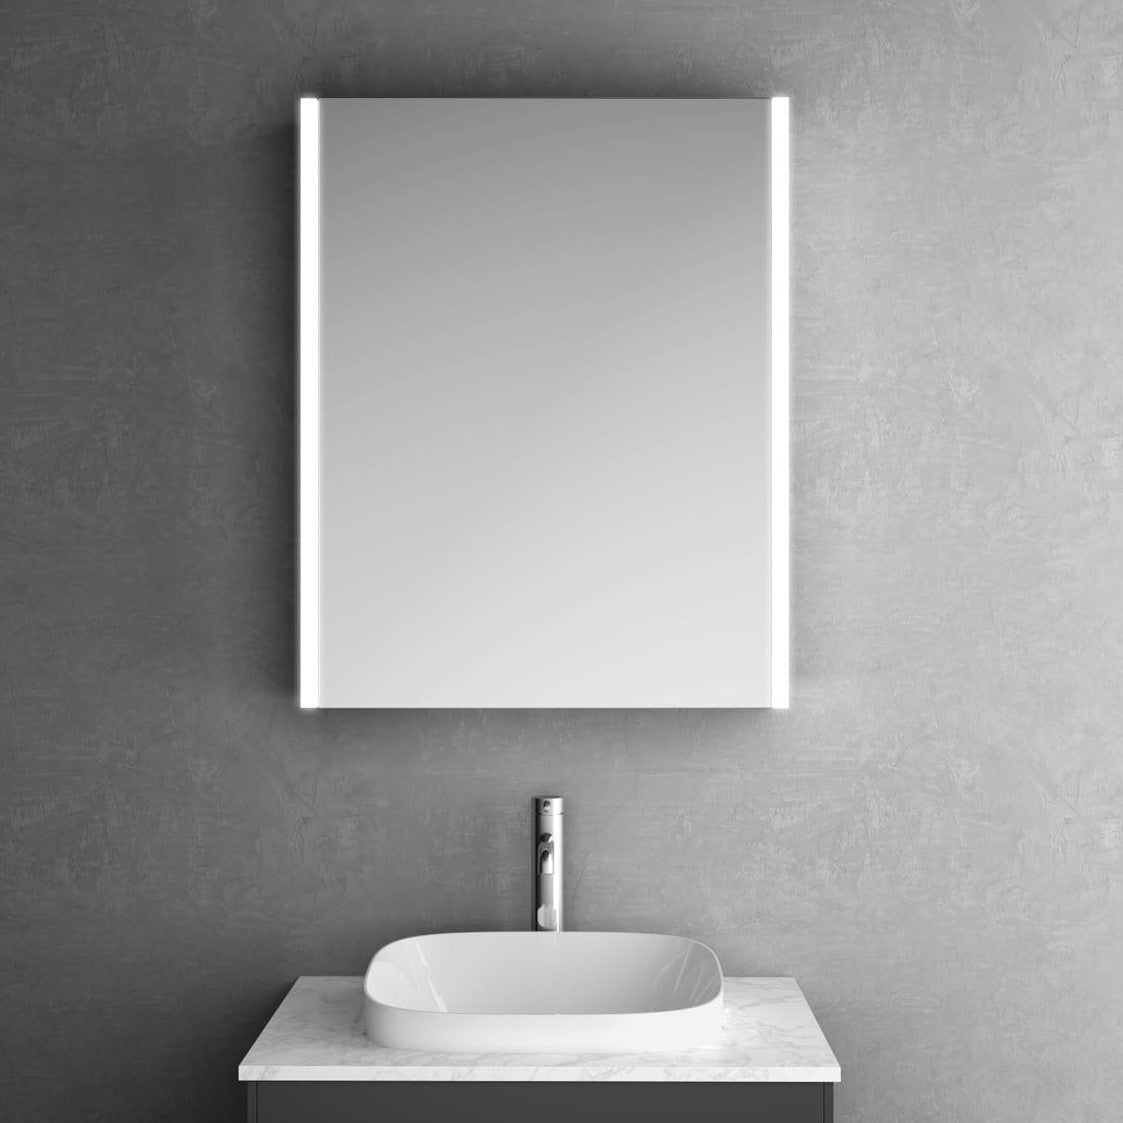 R&T AC 110V Bathroom Illuminated  Mirror Cabinet